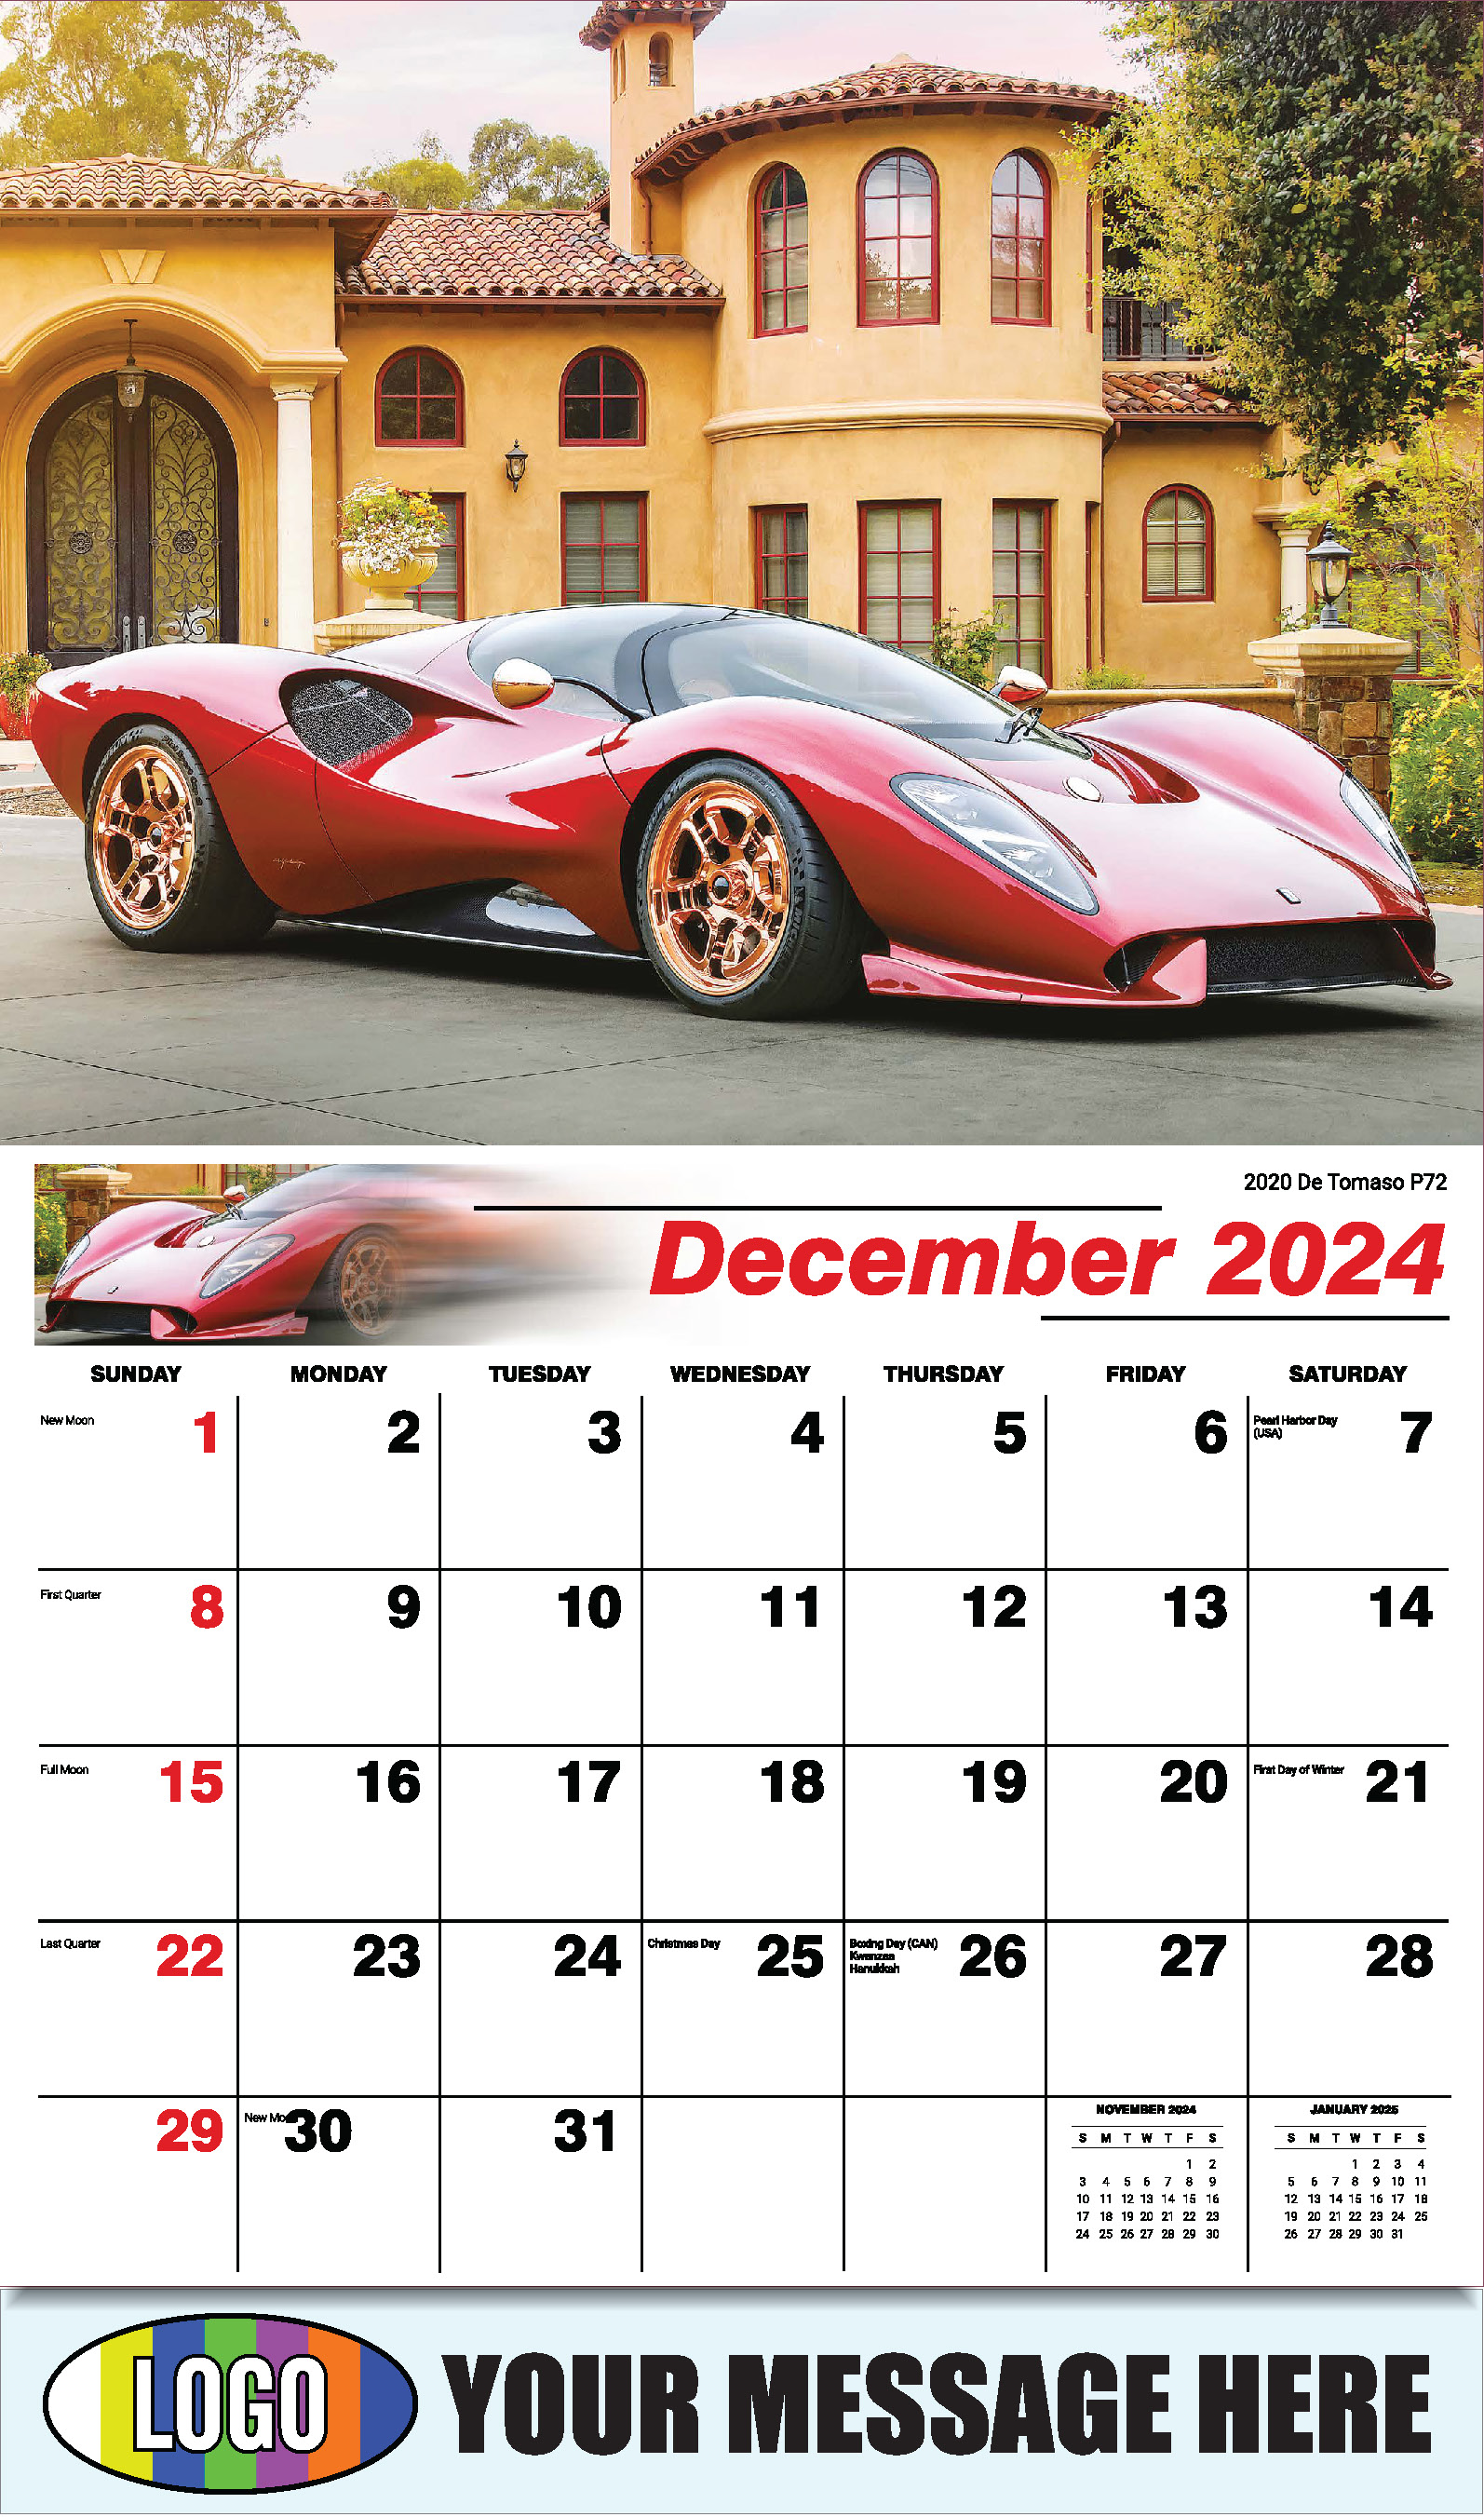 Exotic Cars 2025 Automotive Business Advertising Calendar - December_a